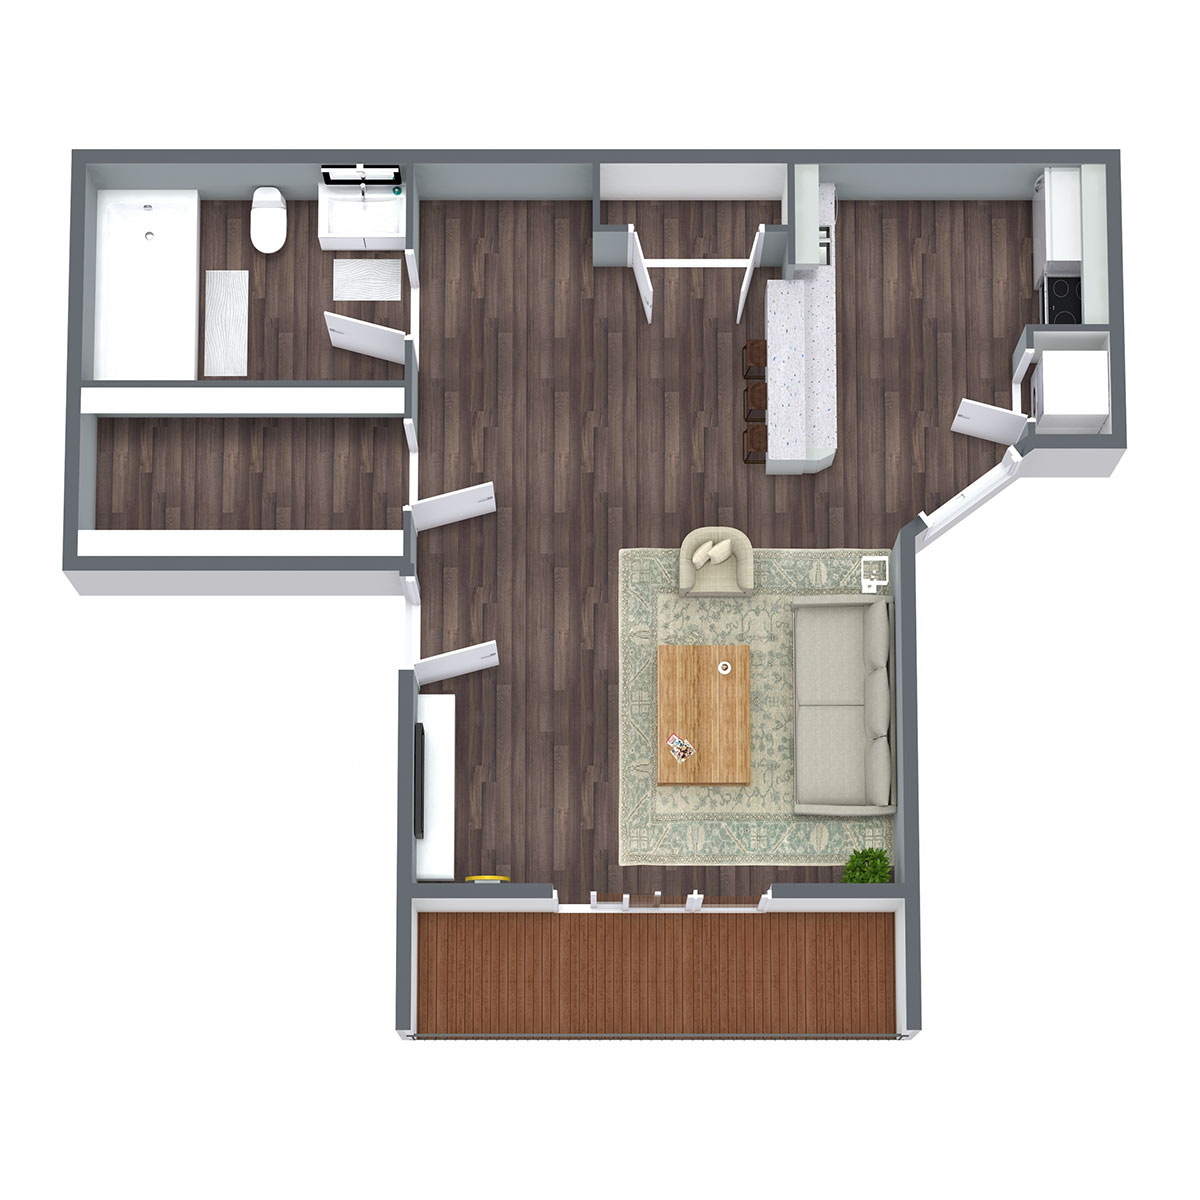 Rock Island Apartments Floorplan 4